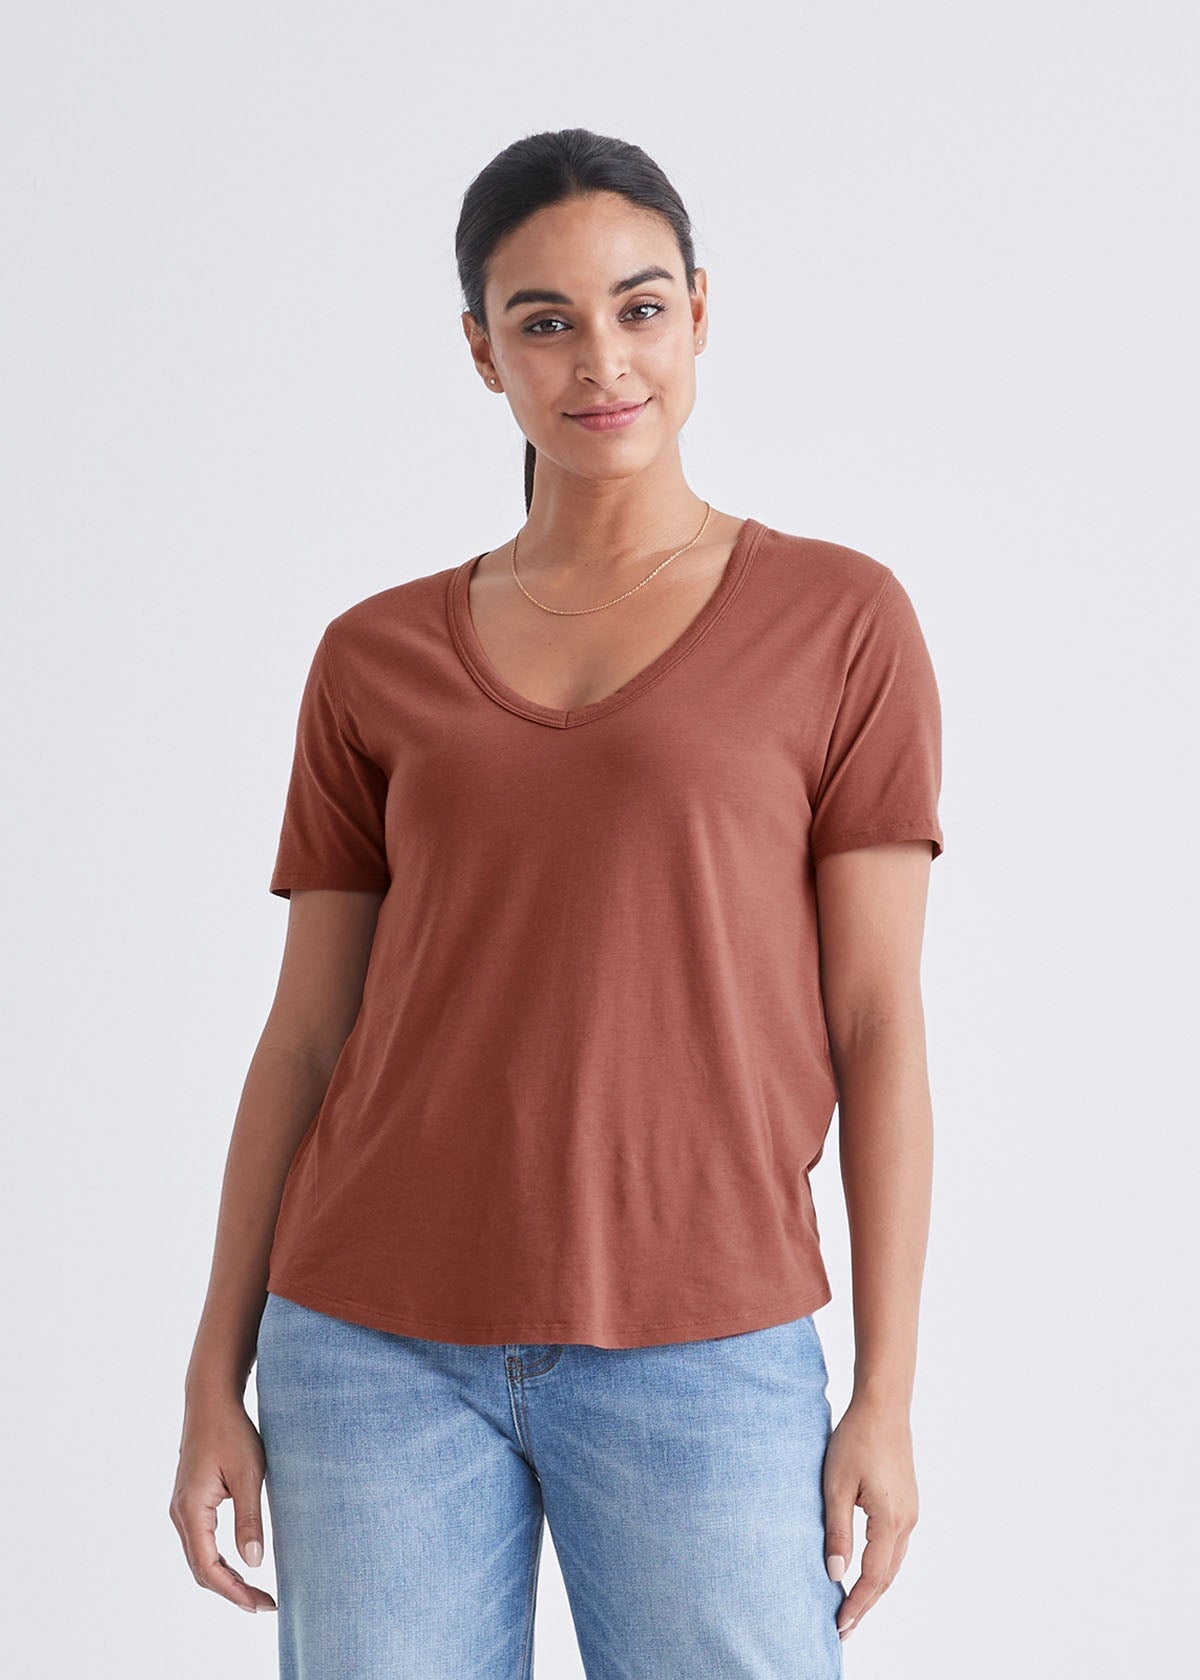 womens soft lightweight reddish-brown v-neck t-shirt front